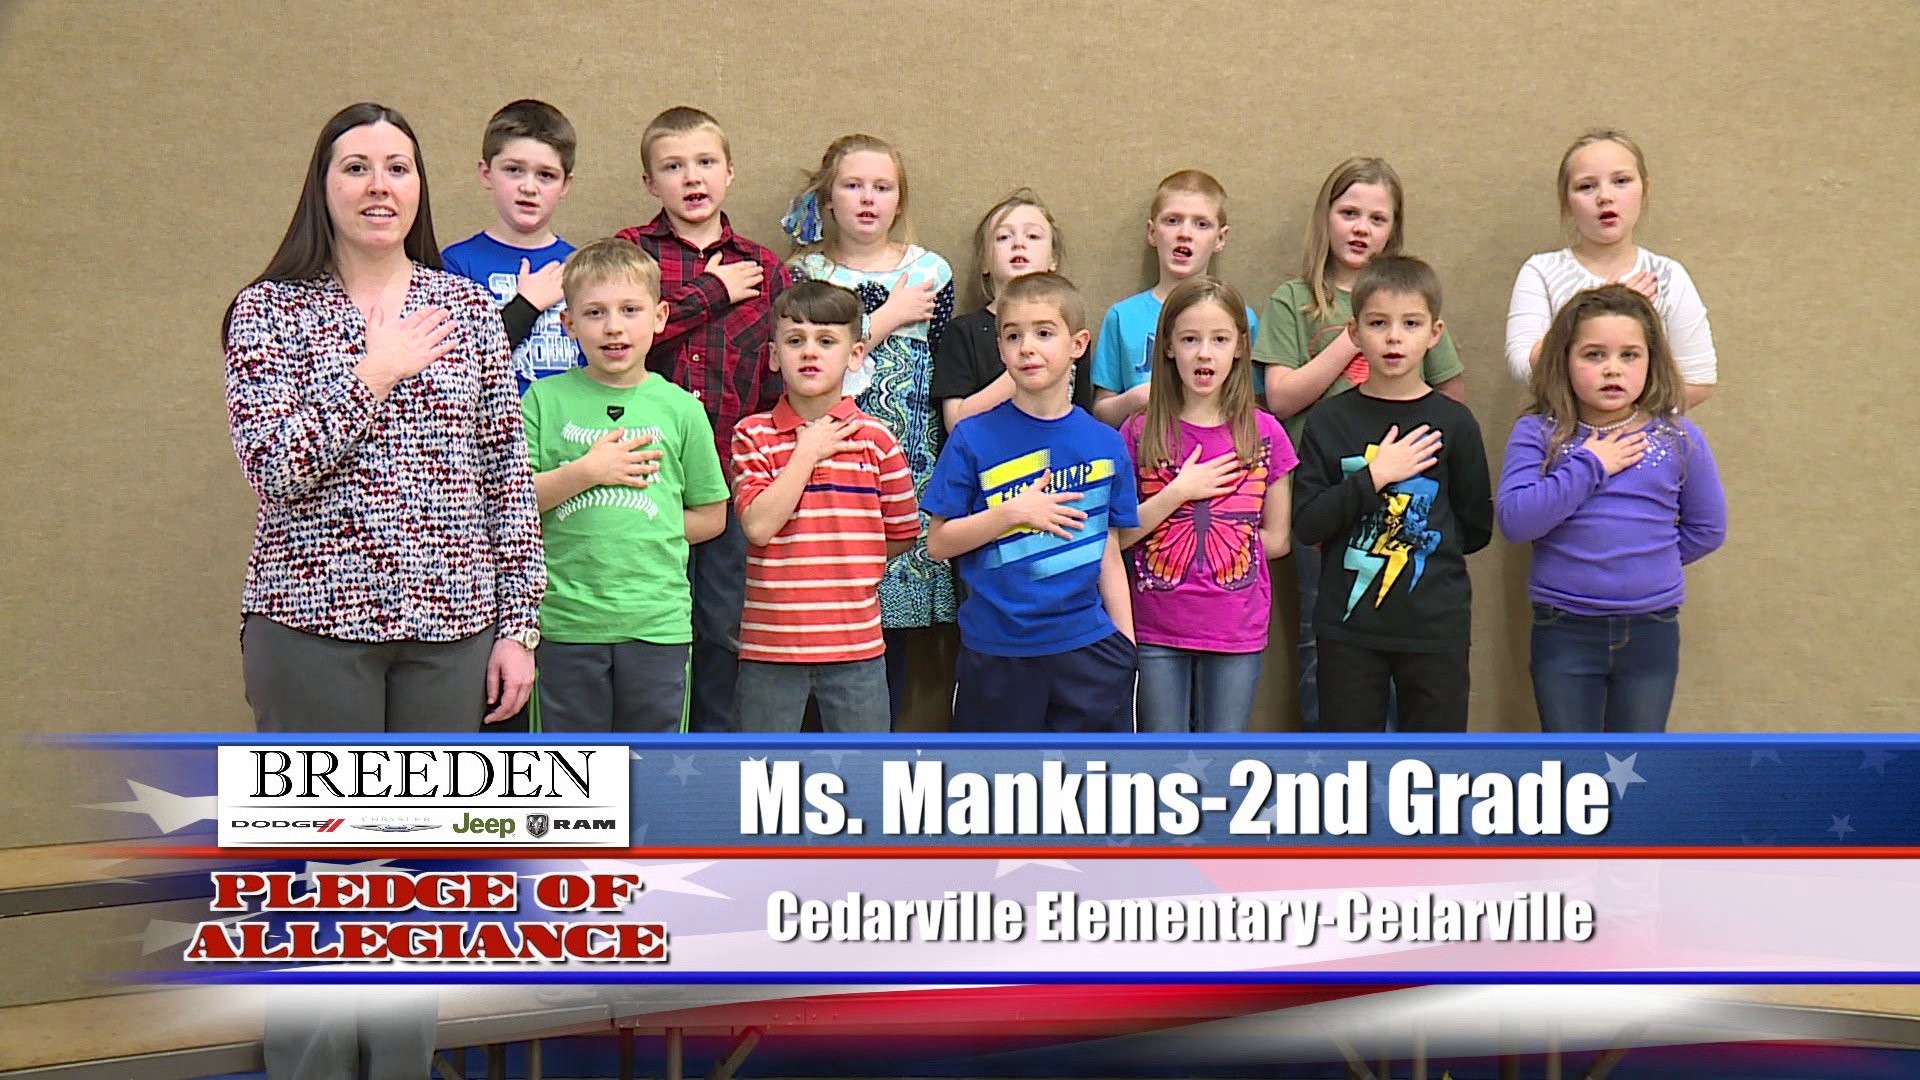 Ms. Mankins 2nd Grade Cedarville Elementary